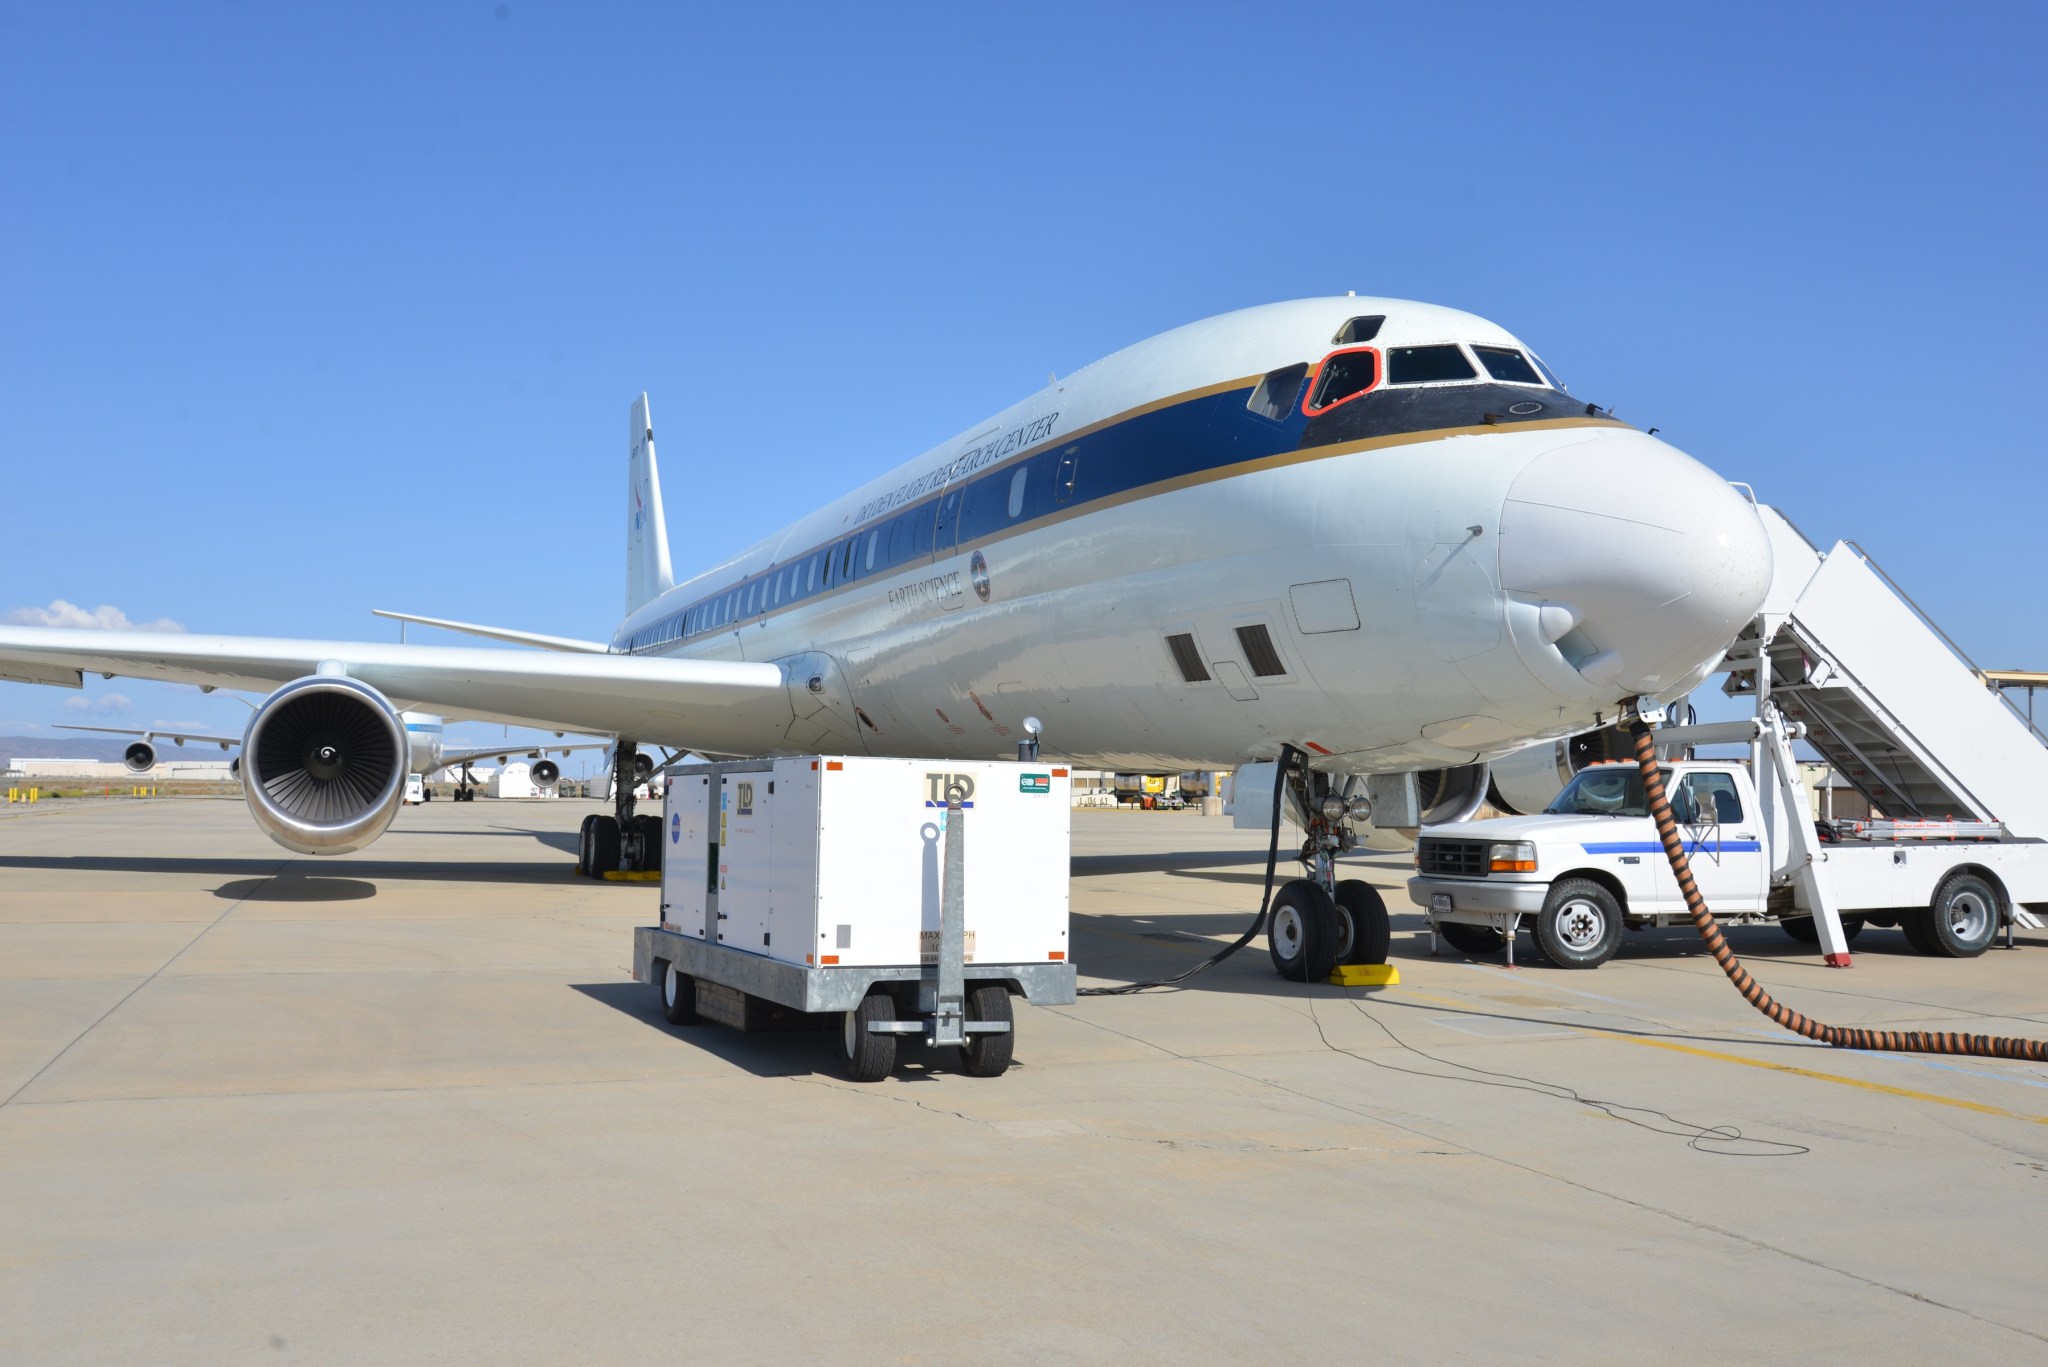 NASA’s DC-8 parked on the tarmac.